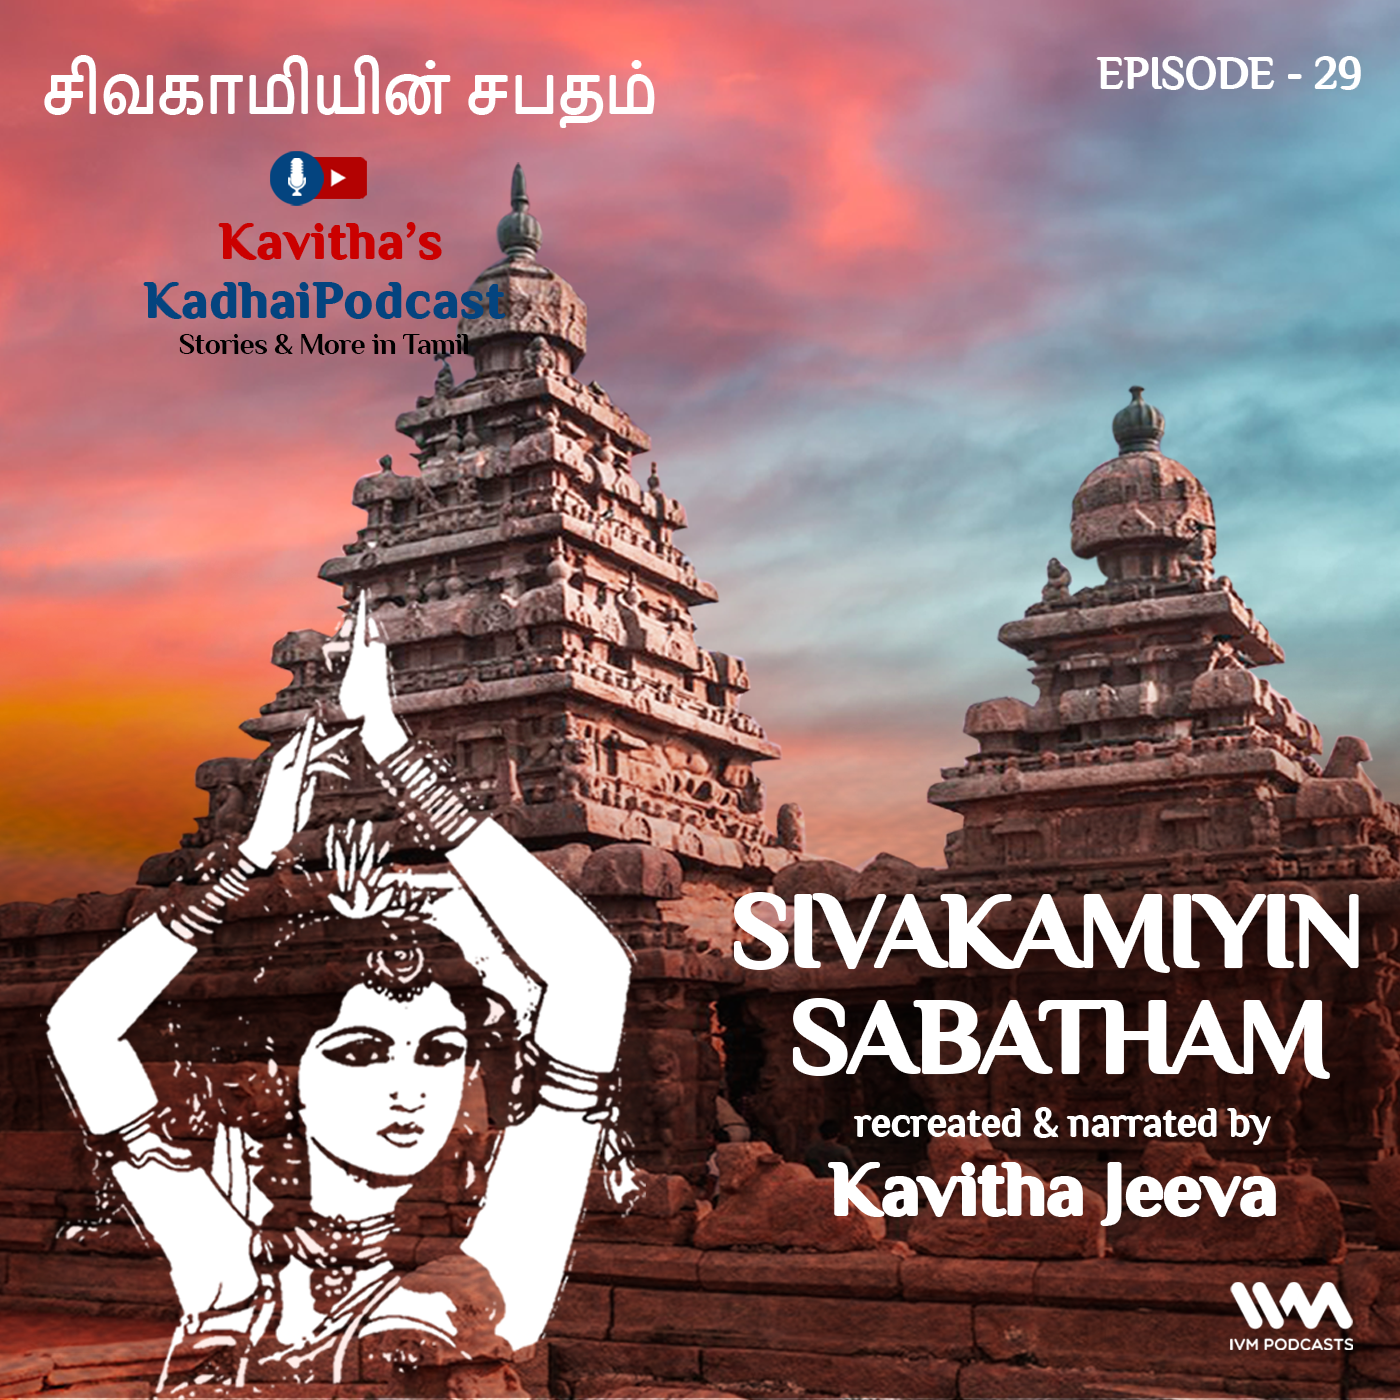 KadhaiPodcast's Sivakamiyin Sabatham - Episode # 29